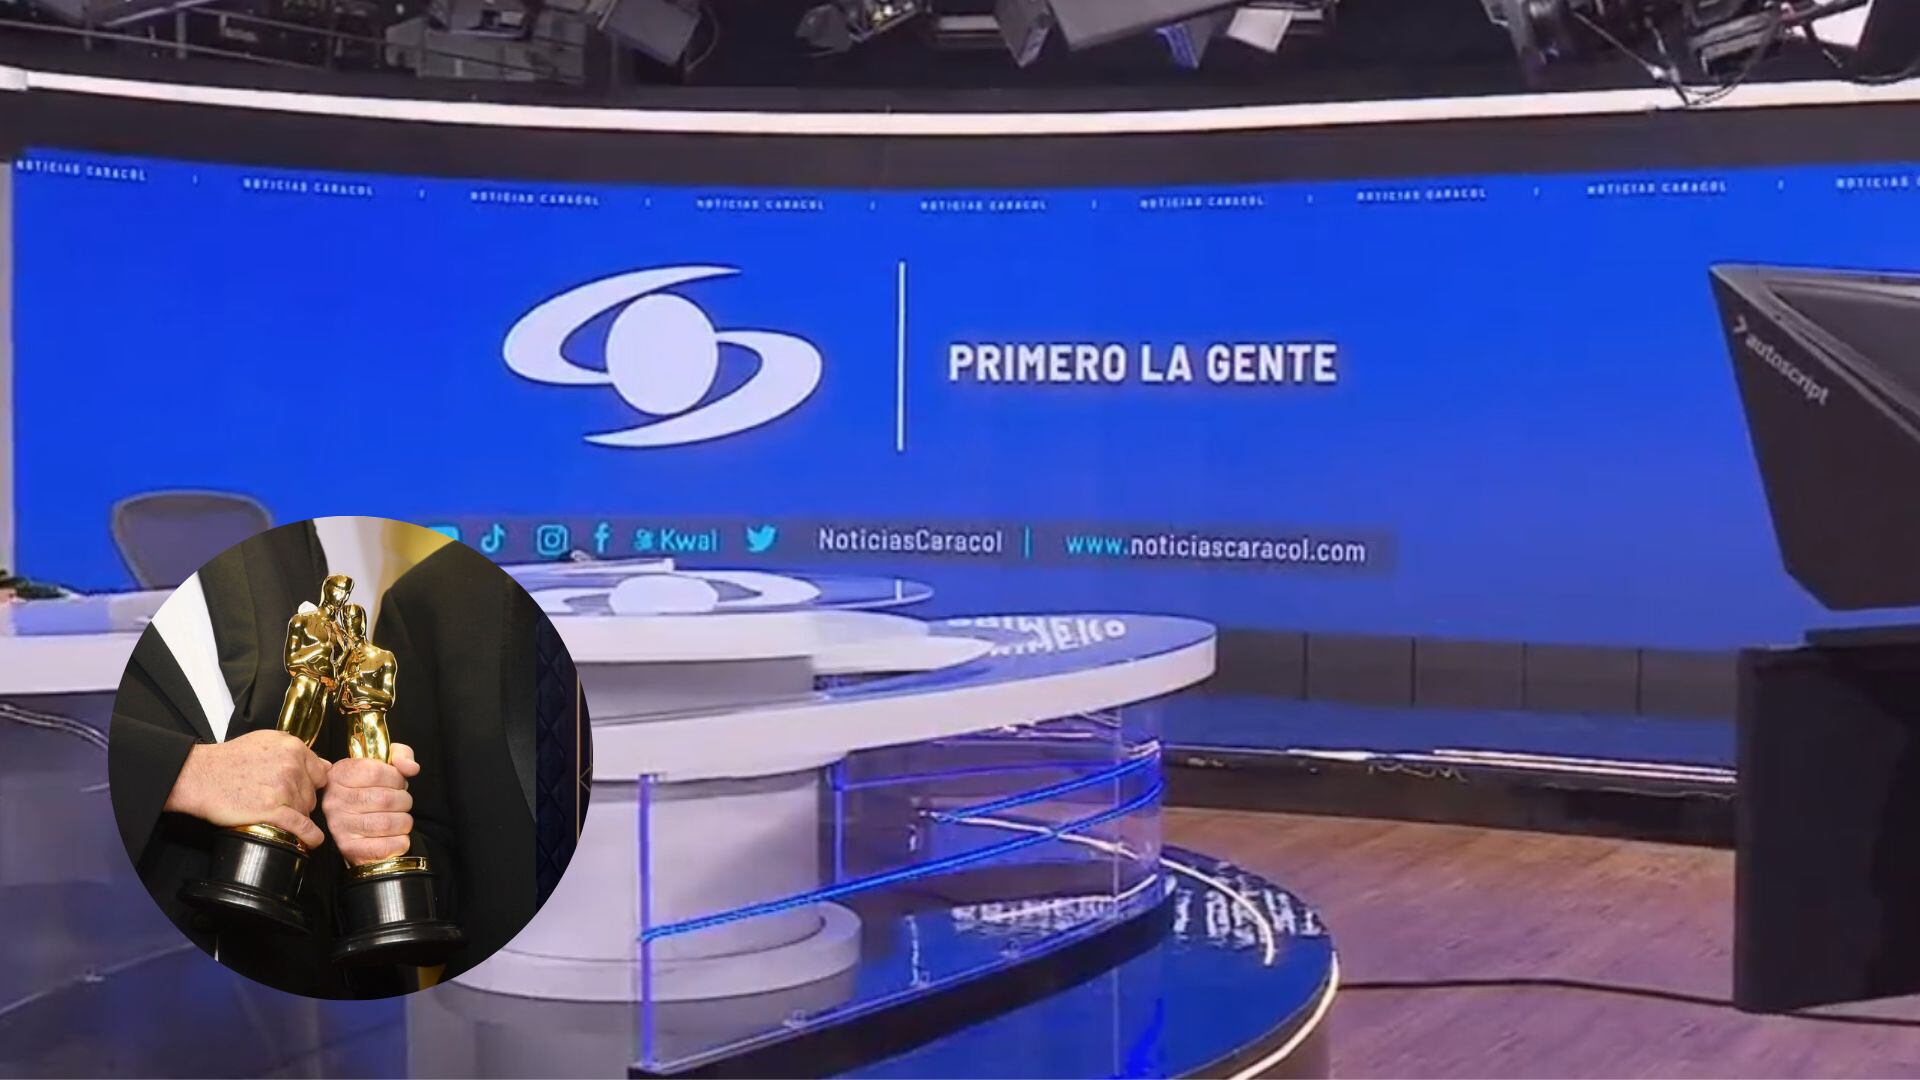 Camarógrafo Noticias Caracol